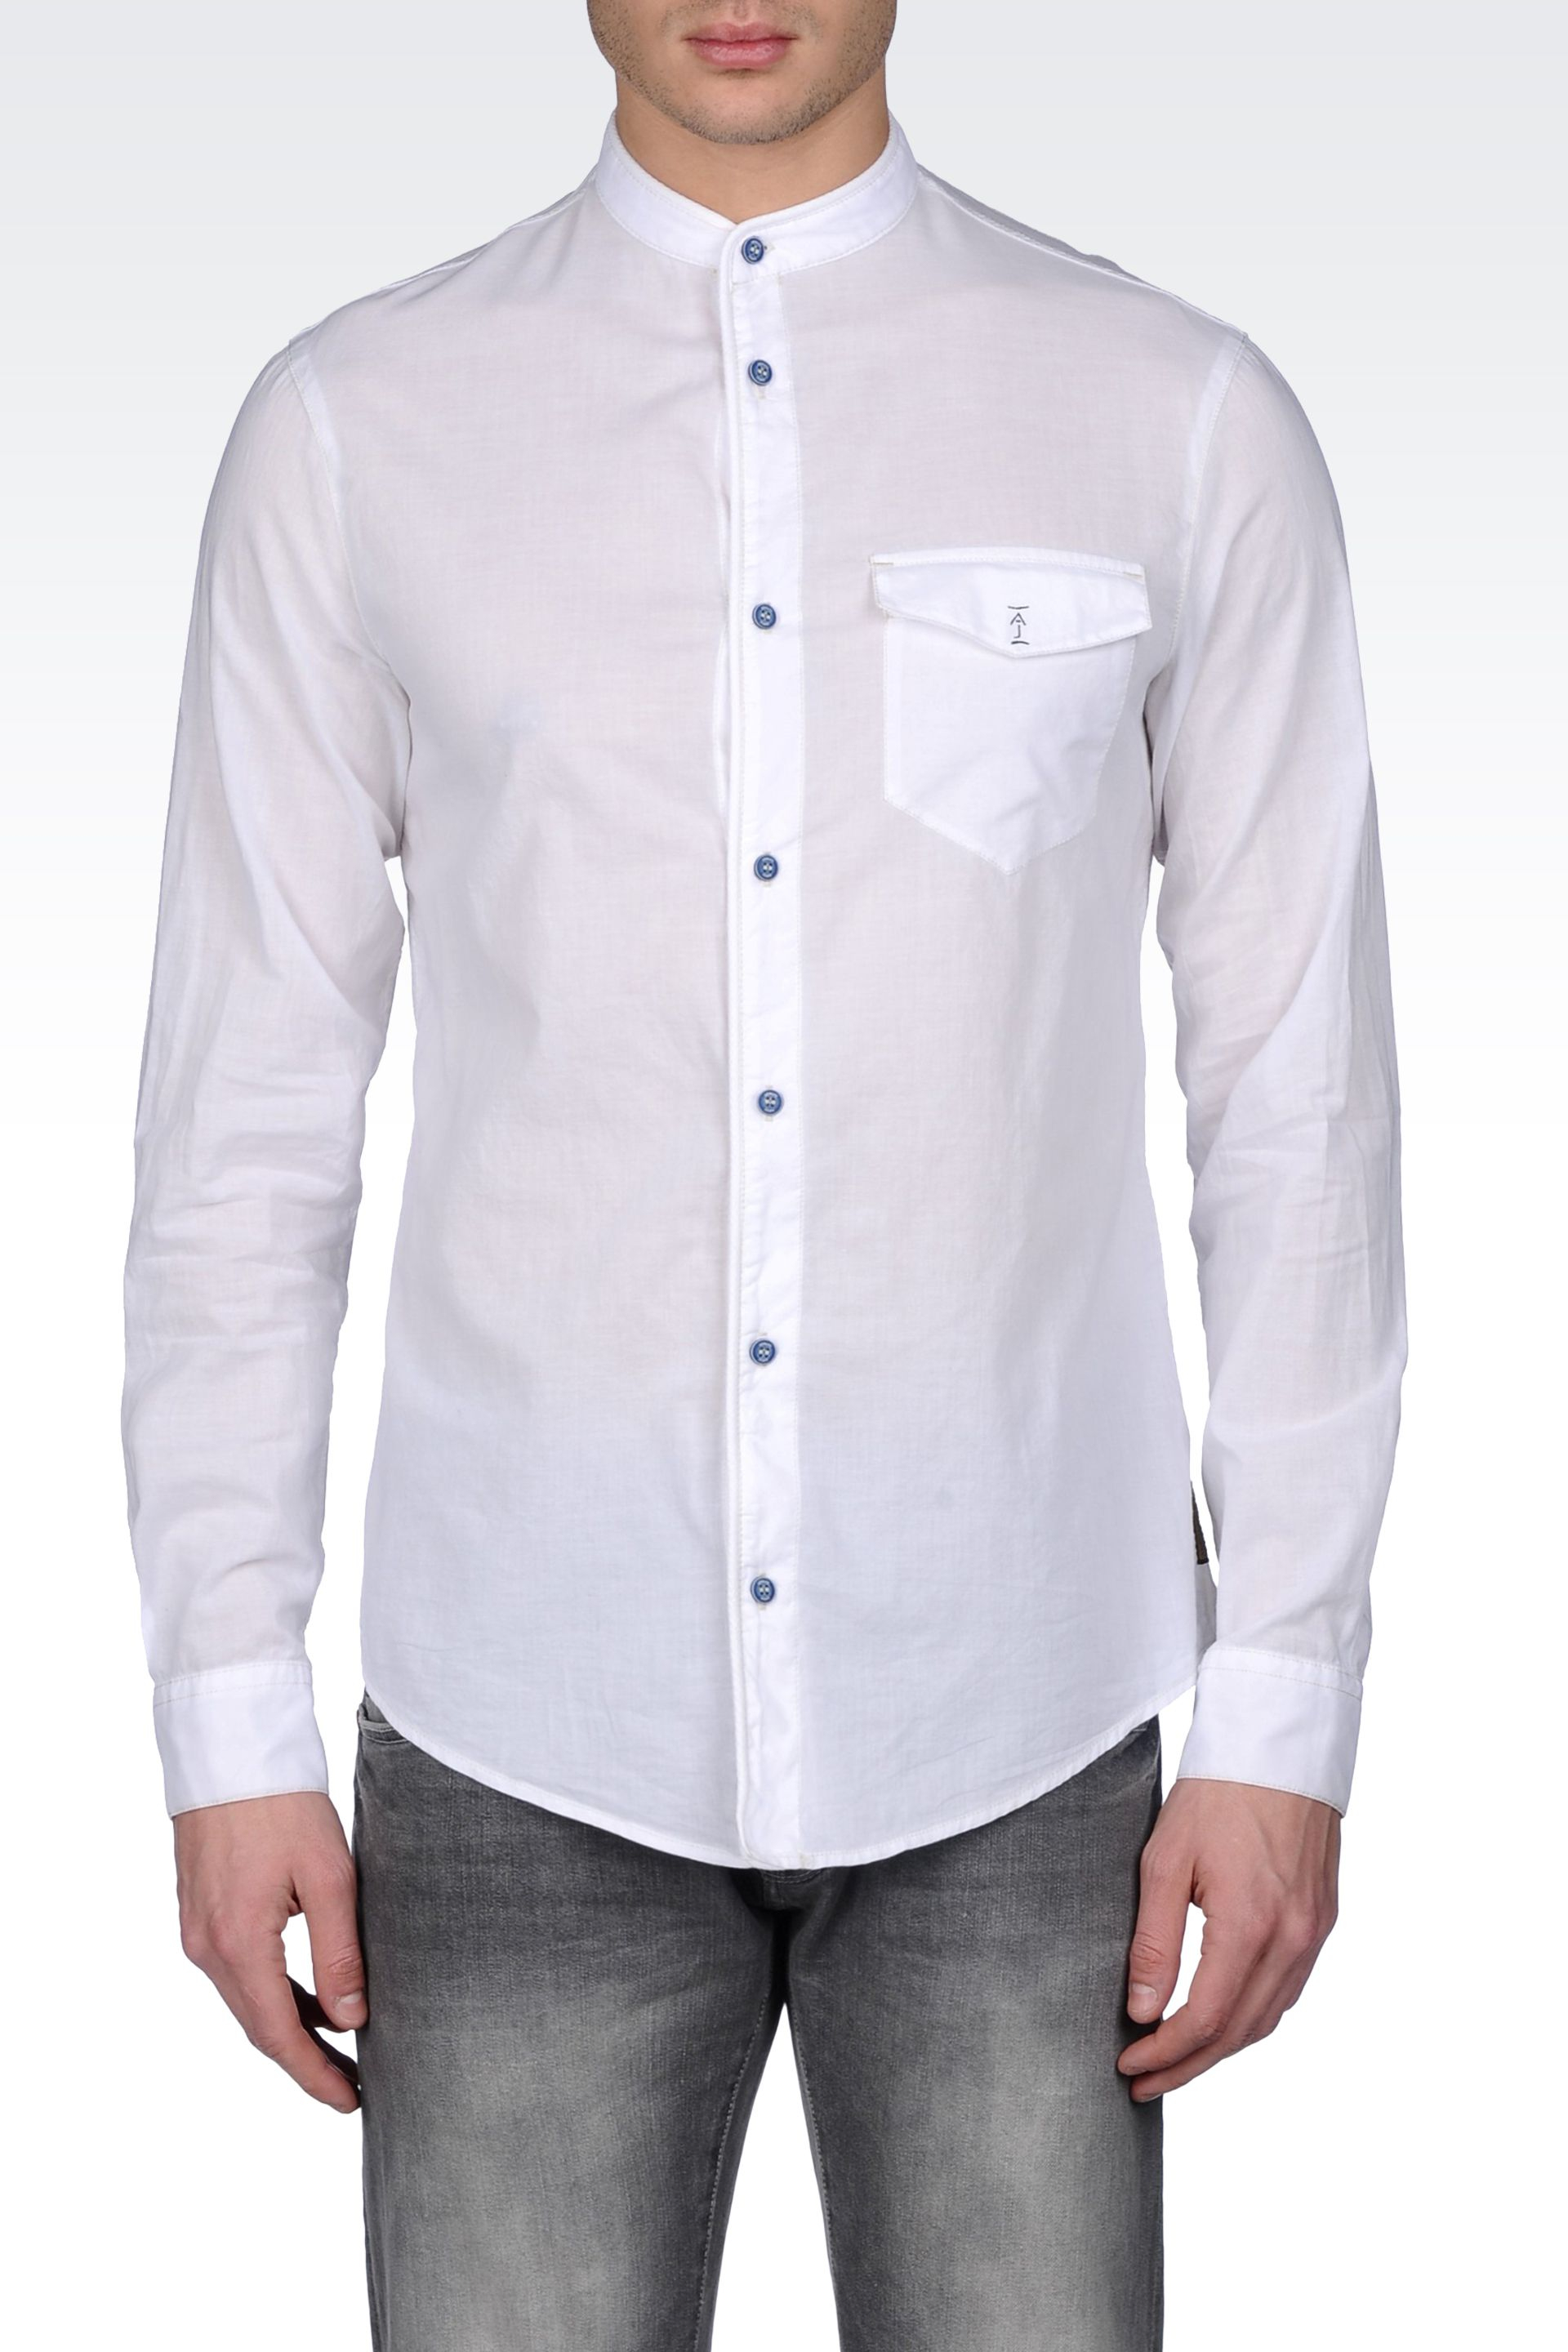 Lyst - Armani Jeans Cotton Muslin Shirt with Mandarin Collar in White ...